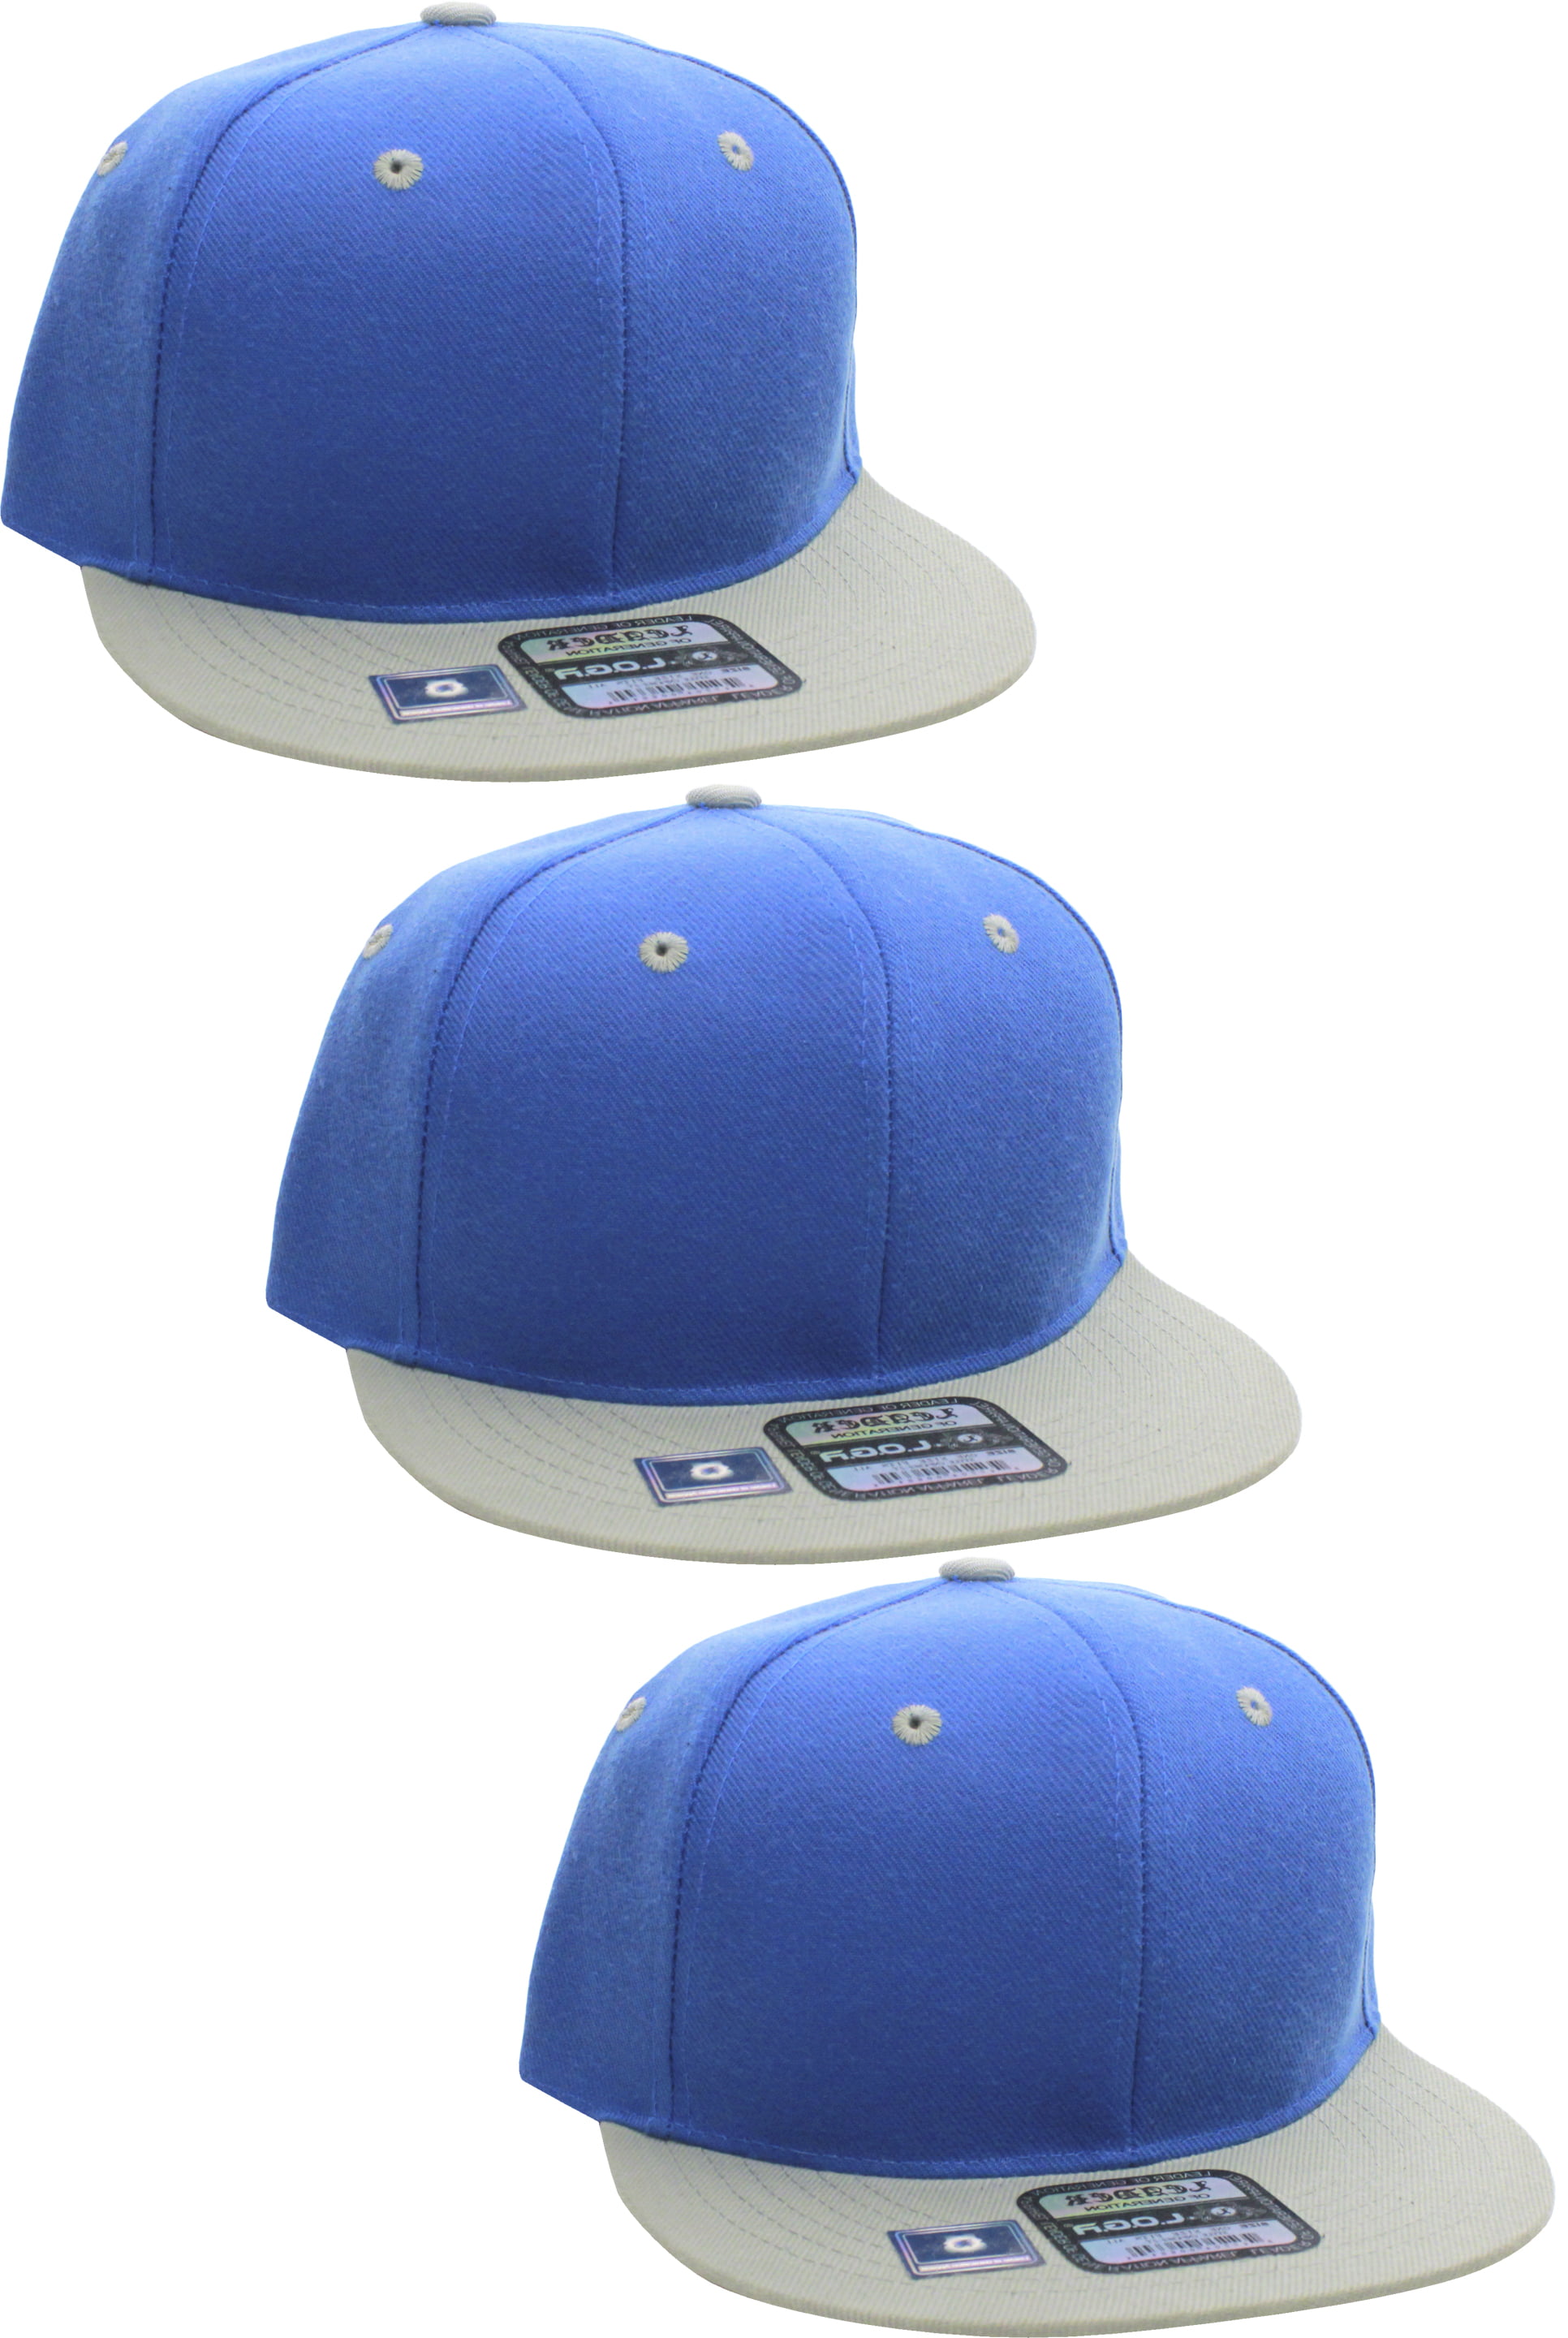 L.O.G.A Plain Flat Bill Visor Blank Snapback Hat Cap with